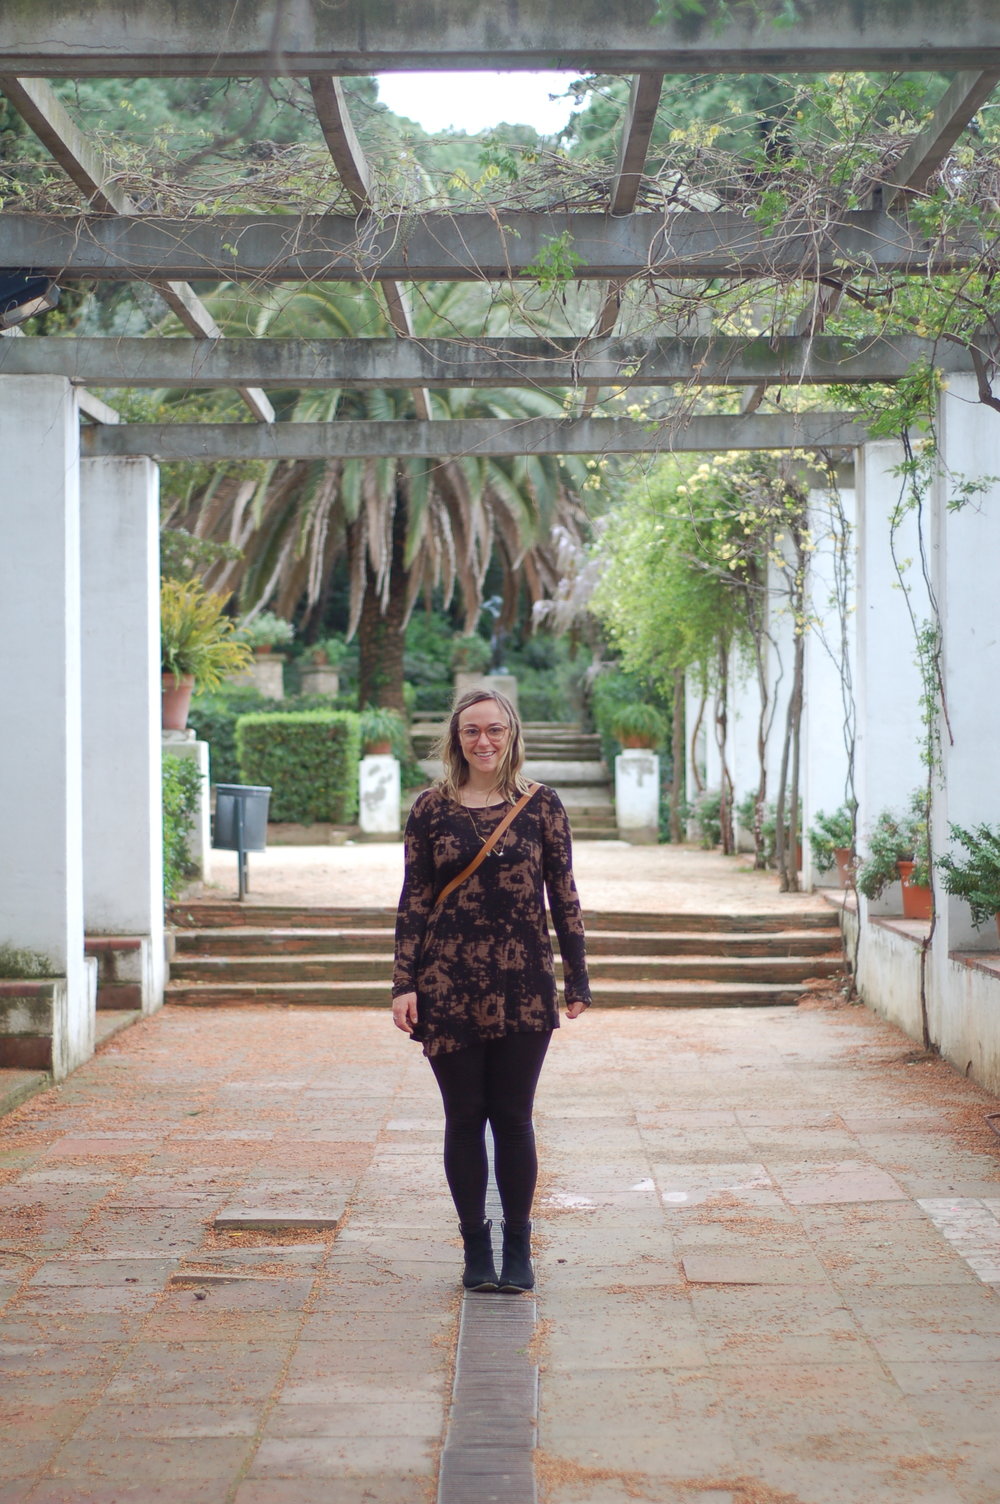  Exploring public gardens in Spain 